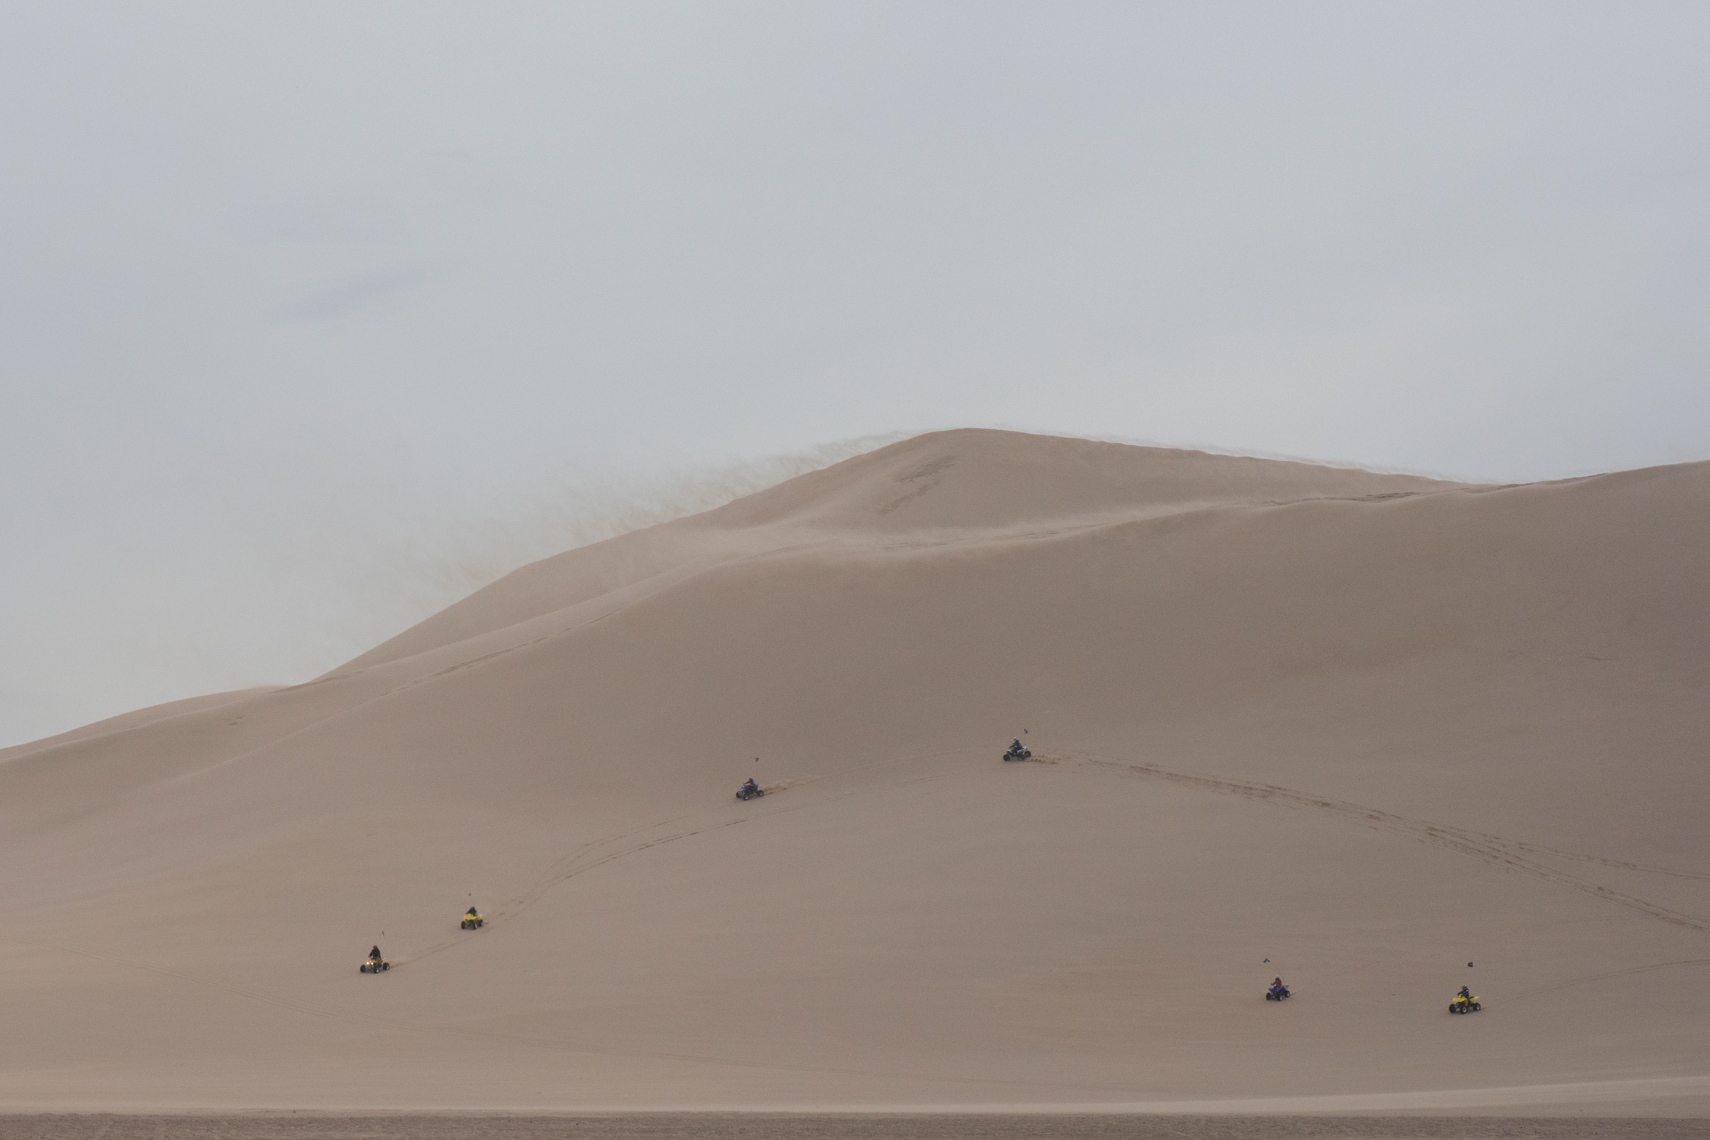 Sand dunes in Southern California desert